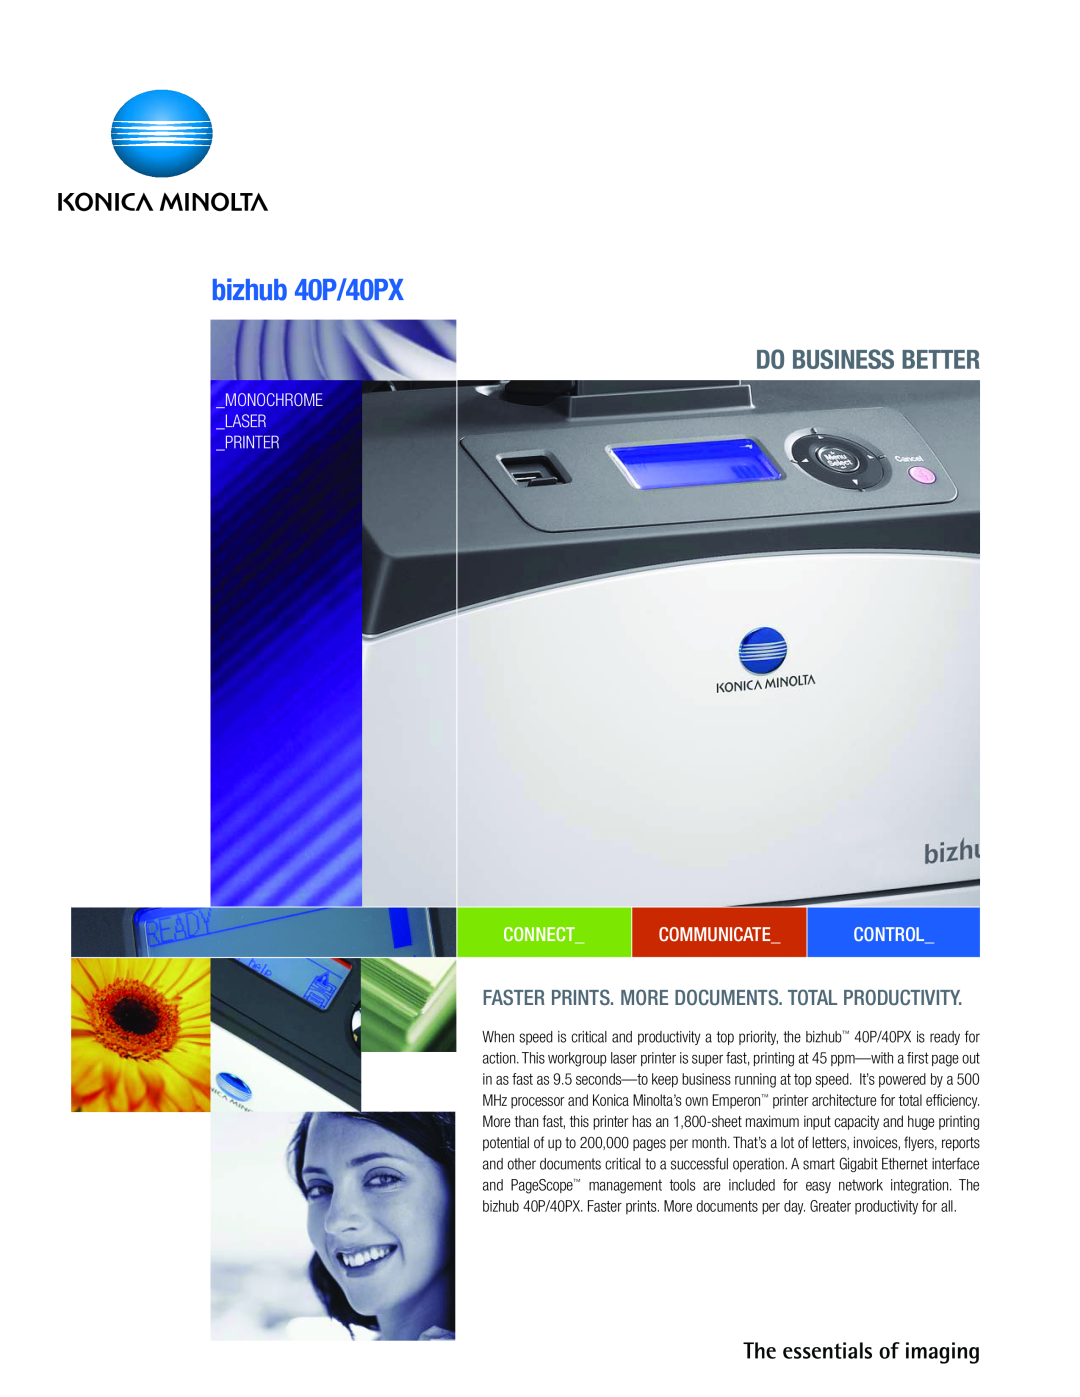 Konica Minolta manual bizhub 40P/40PX, Do Business Better, Connect, Control, Communicate, Monochrome Laser Printer 